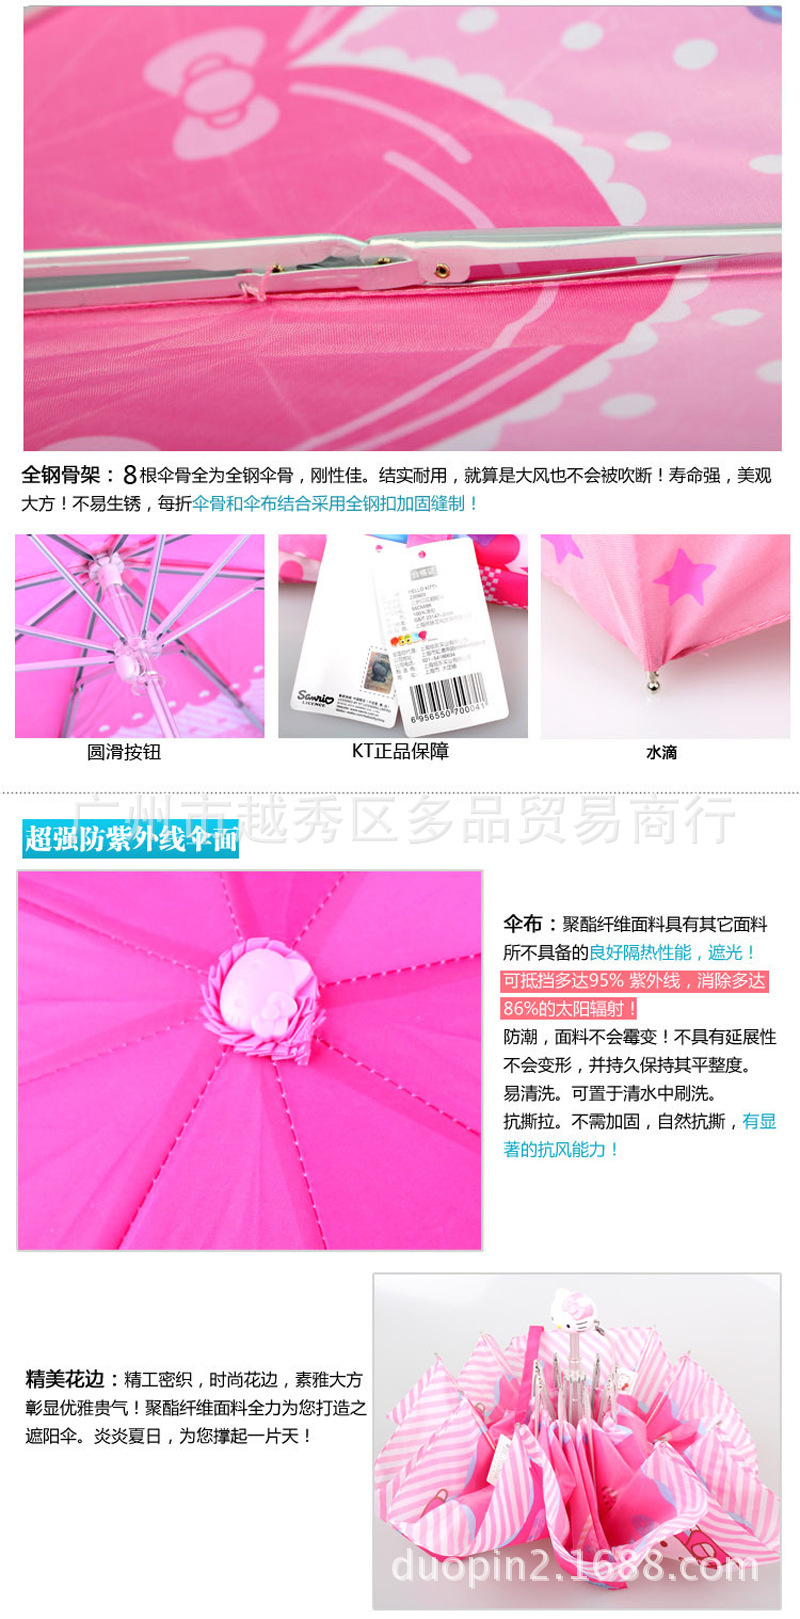 Factory direct sales of new Hellokitty folding umbrella cartoon seventy percent off umbrella stainless steel umbrella, random delivery3